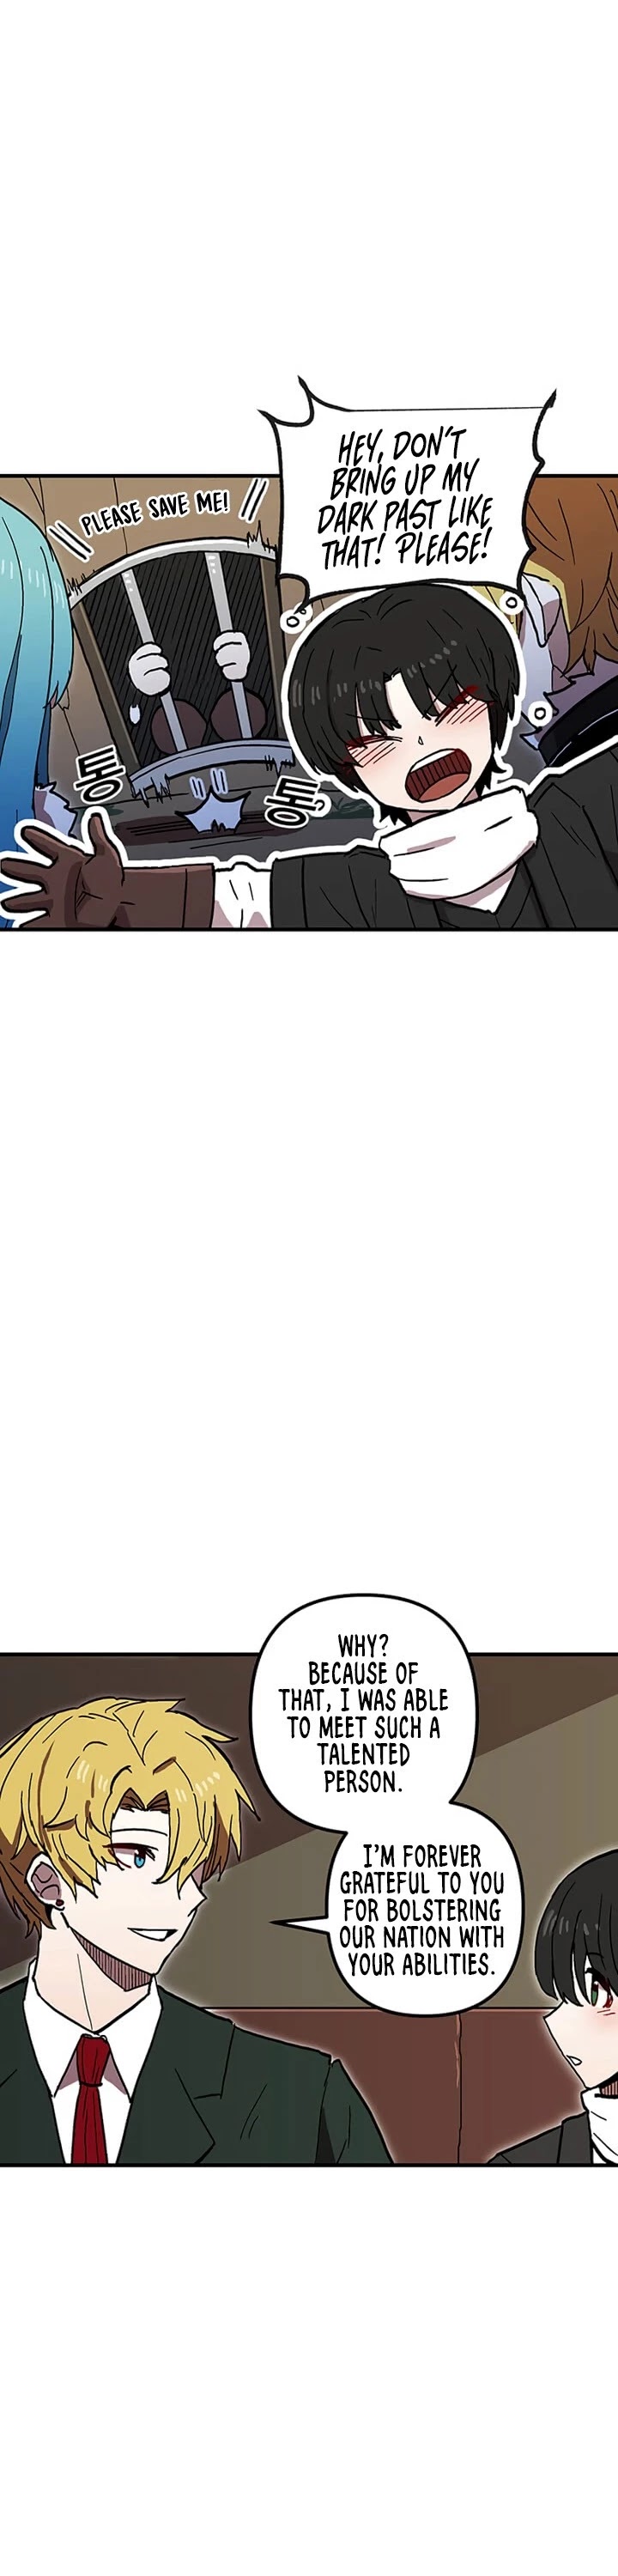 Solo Bug Player, Solo Bug Player manga, Solo Bug Player manga online, read Solo Bug Player, read Bug Player, Bug Player manga, Bug Player manga online, read Bug Player manga, Solo Bug Player manhwa, Solo Bug Player manhwa online, Bug Player manhwa, Bug Player manhwa online, read Bug Player manhwa, bug player novel wiki, solo bug player 11, solo bug player 17, bug player raw, bug player chapter 8, bug player chapter 14, bug player novelupdates, bug player chapter 9, bug player chapter 15, bug player chapter 20, bug player 21, bug player 14, bugbear player race 5e, bug solo player, bug solo player manga, bug head emperor player download, big w dvd player, bug freebox delta player, bug player devialet, bug be player, bug flash player dofus, big multiplayer game, bug player map, bug player neox, bug player pop, bug player pick fifa 20, bug player pick fifa 21, bug player pt br, bug player pick, bug player pop free, bug player novel pdf, bug playe
r freebox pop, bug player novela ligera pdf, bug quicktime player mac, is quicktime player safe for mac, how do i get quicktime player on my mac, how do i get quicktime player to work on my mac, how to hide quicktime player control mac, can't play quicktime on mac